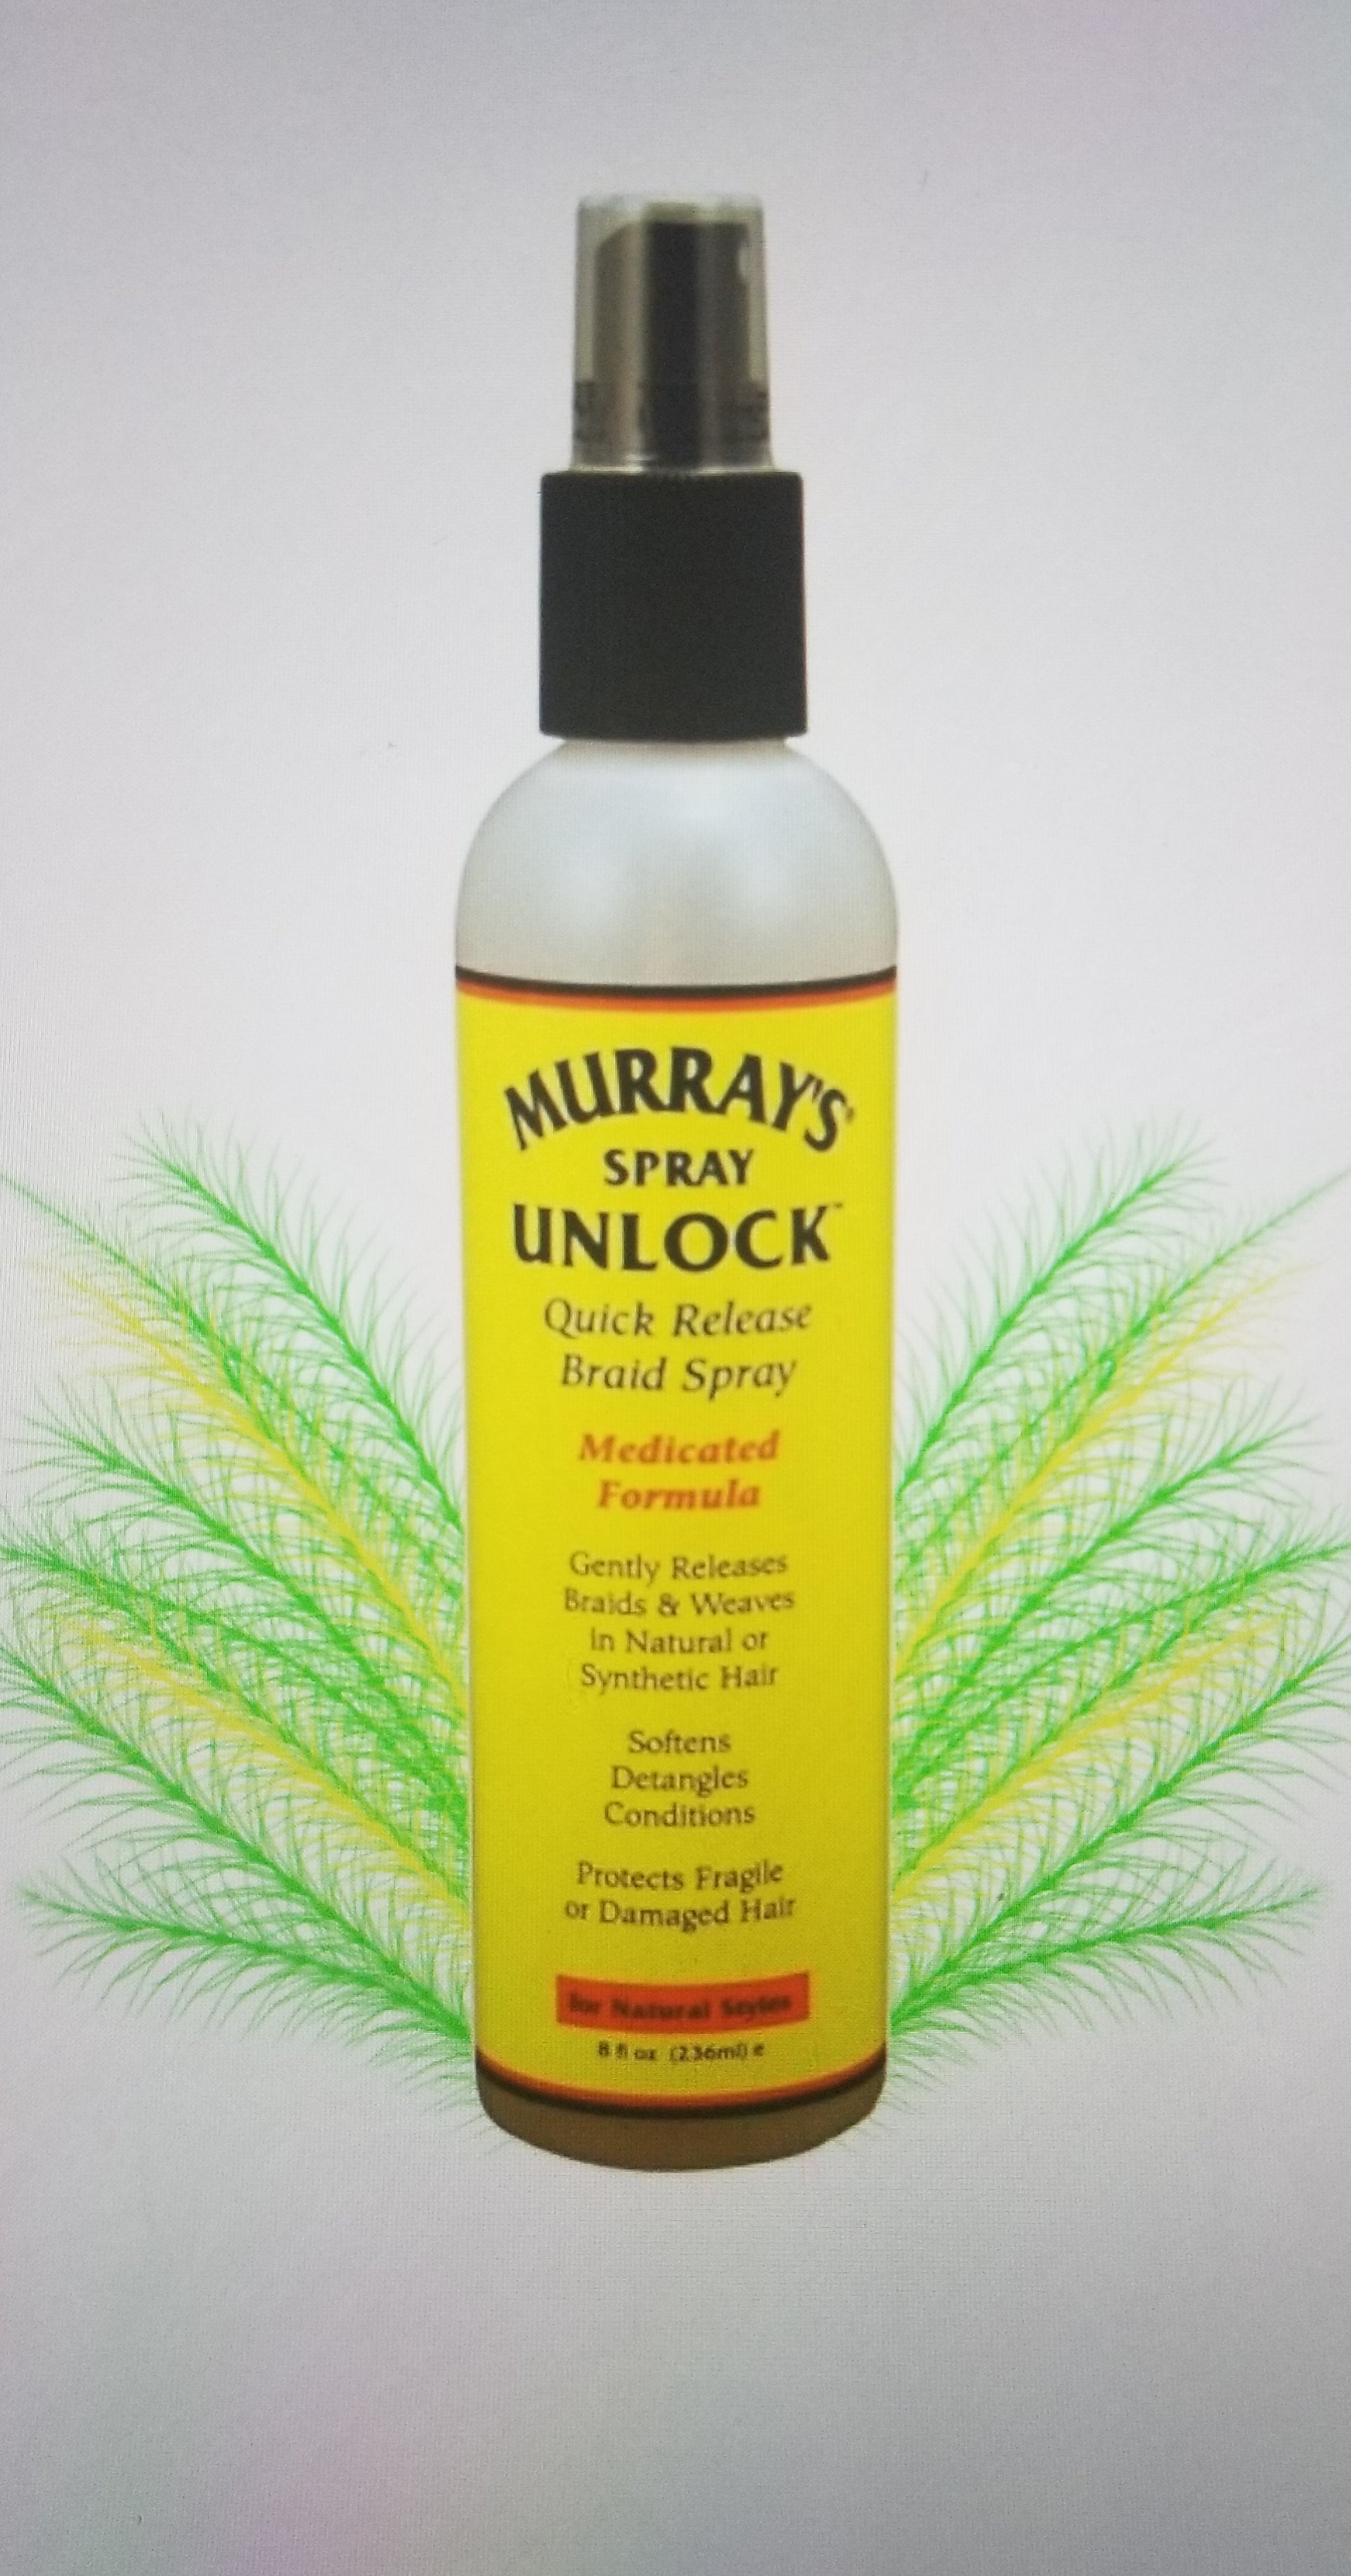 Murray's- Murry's Spray Unlock